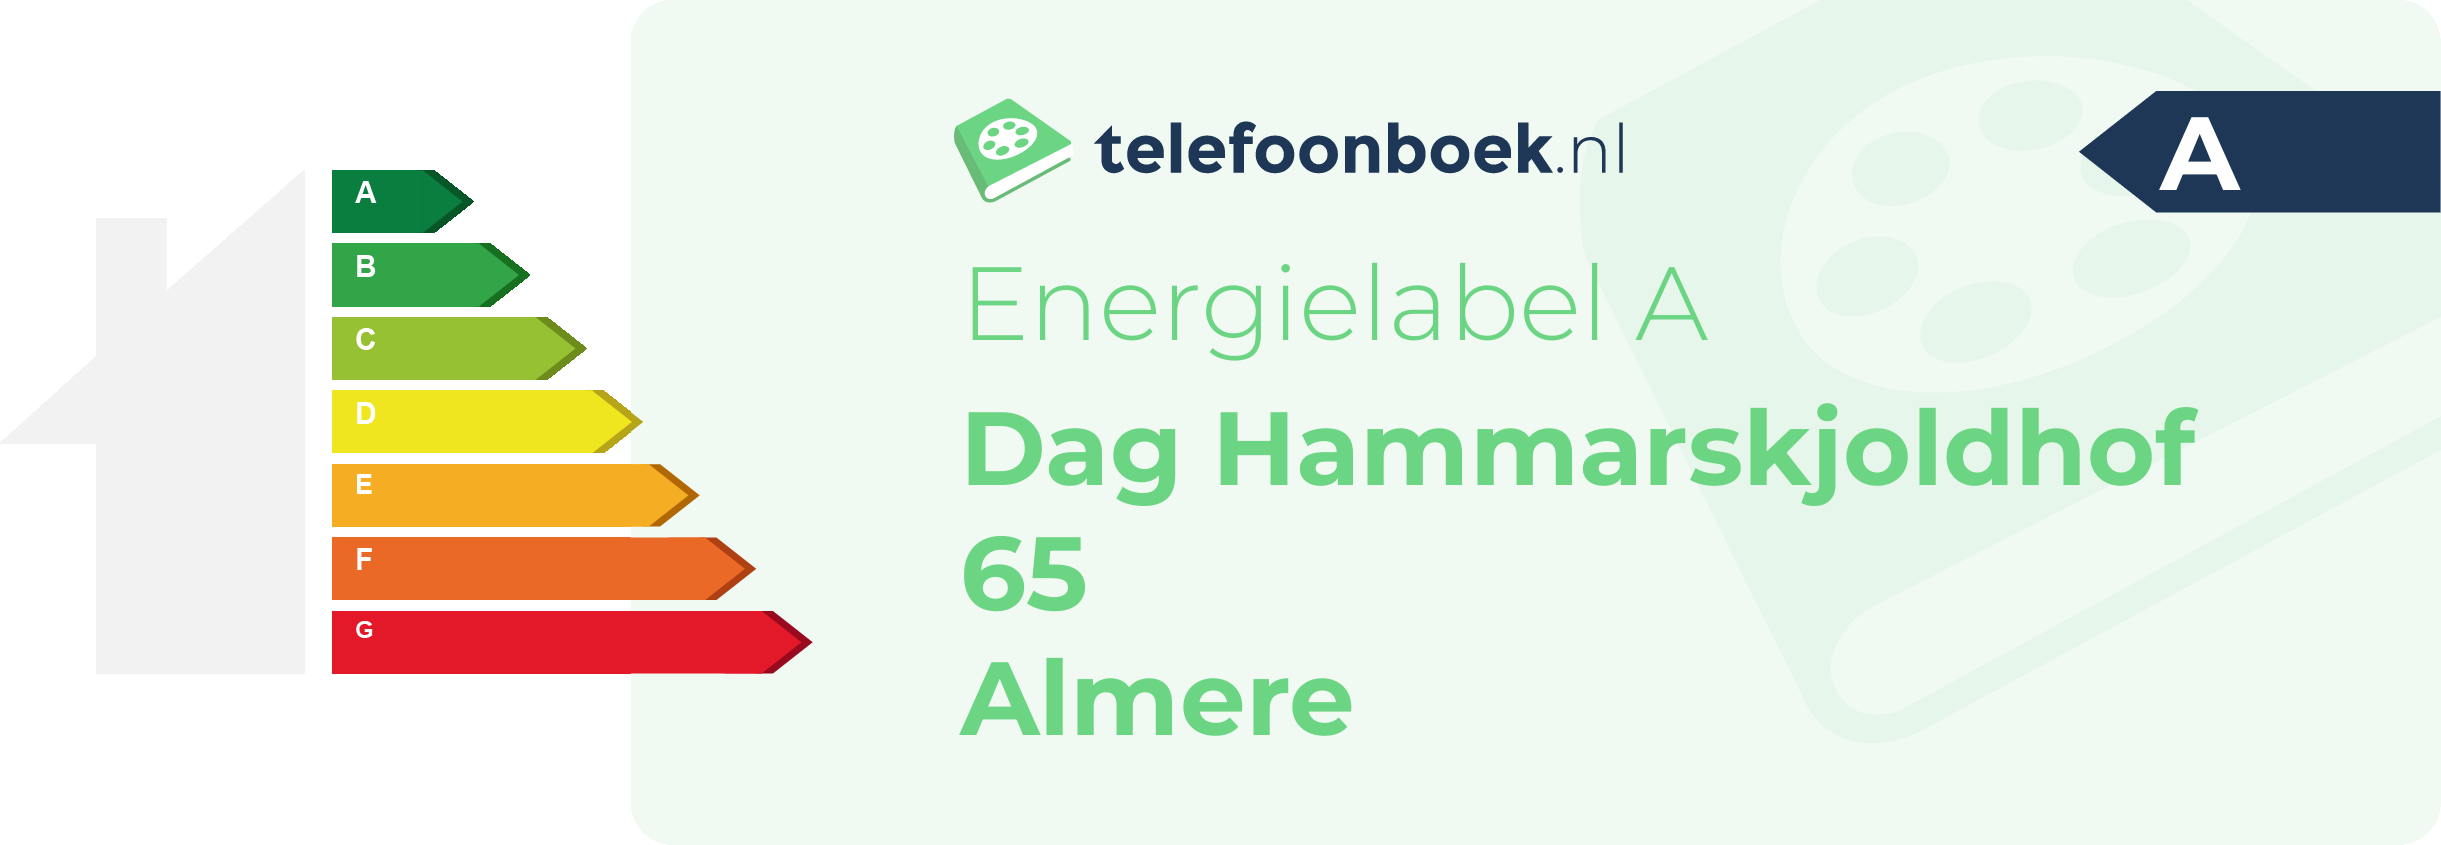 Energielabel Dag Hammarskjoldhof 65 Almere